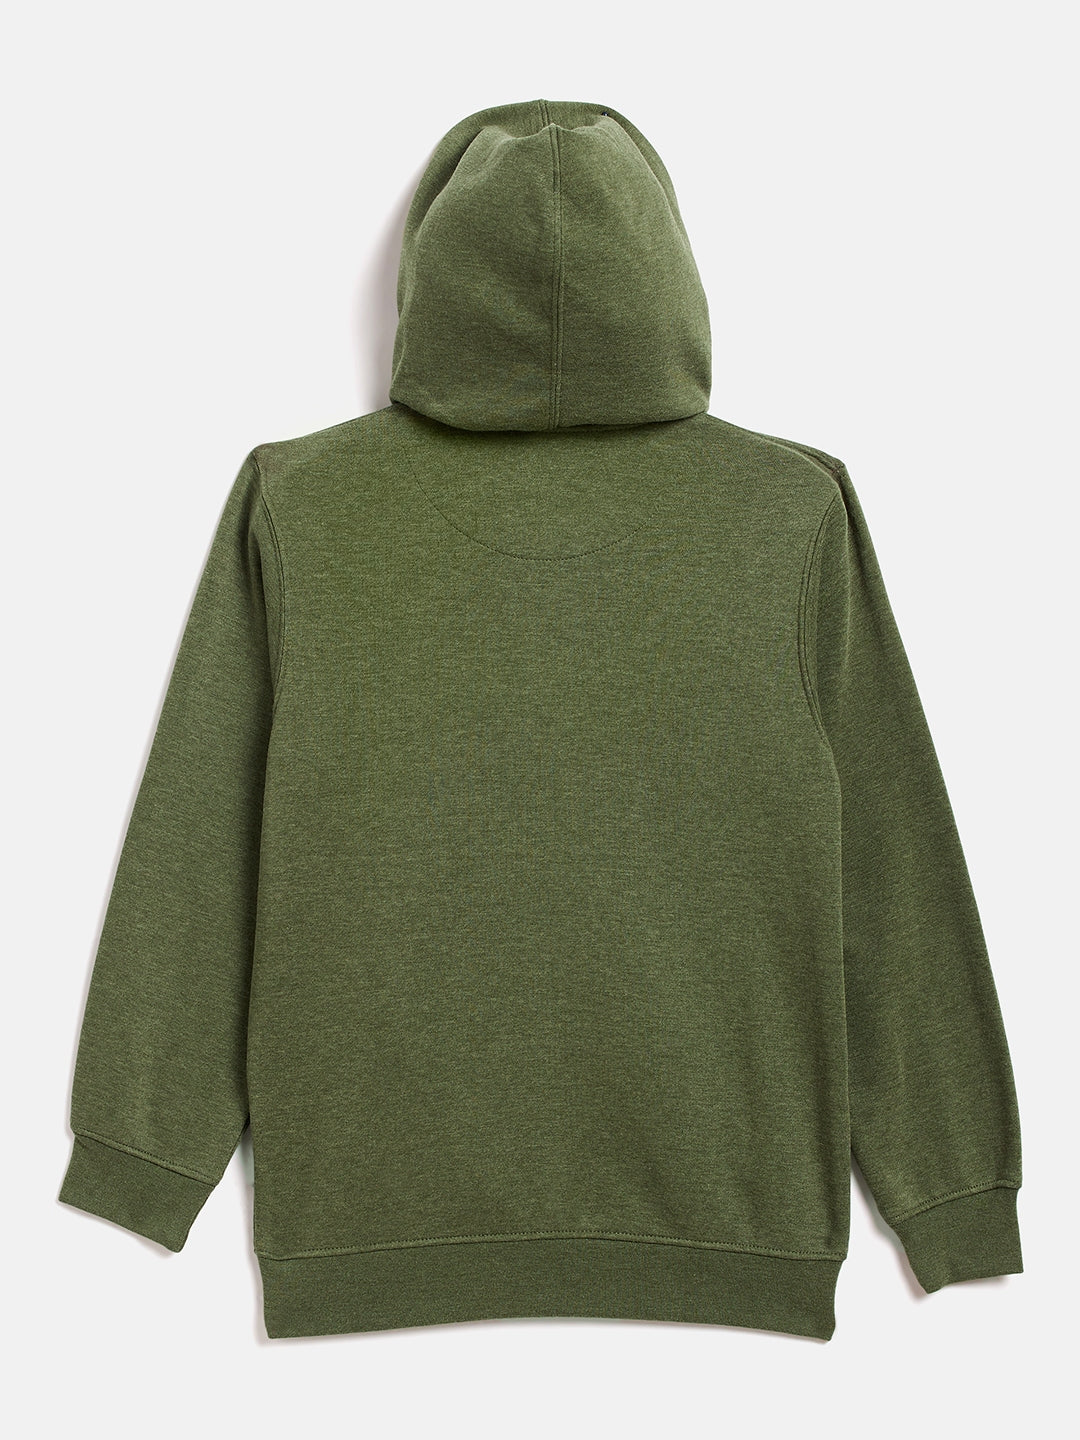 Olive Hooded Sweatshirt - Boys Sweatshirts